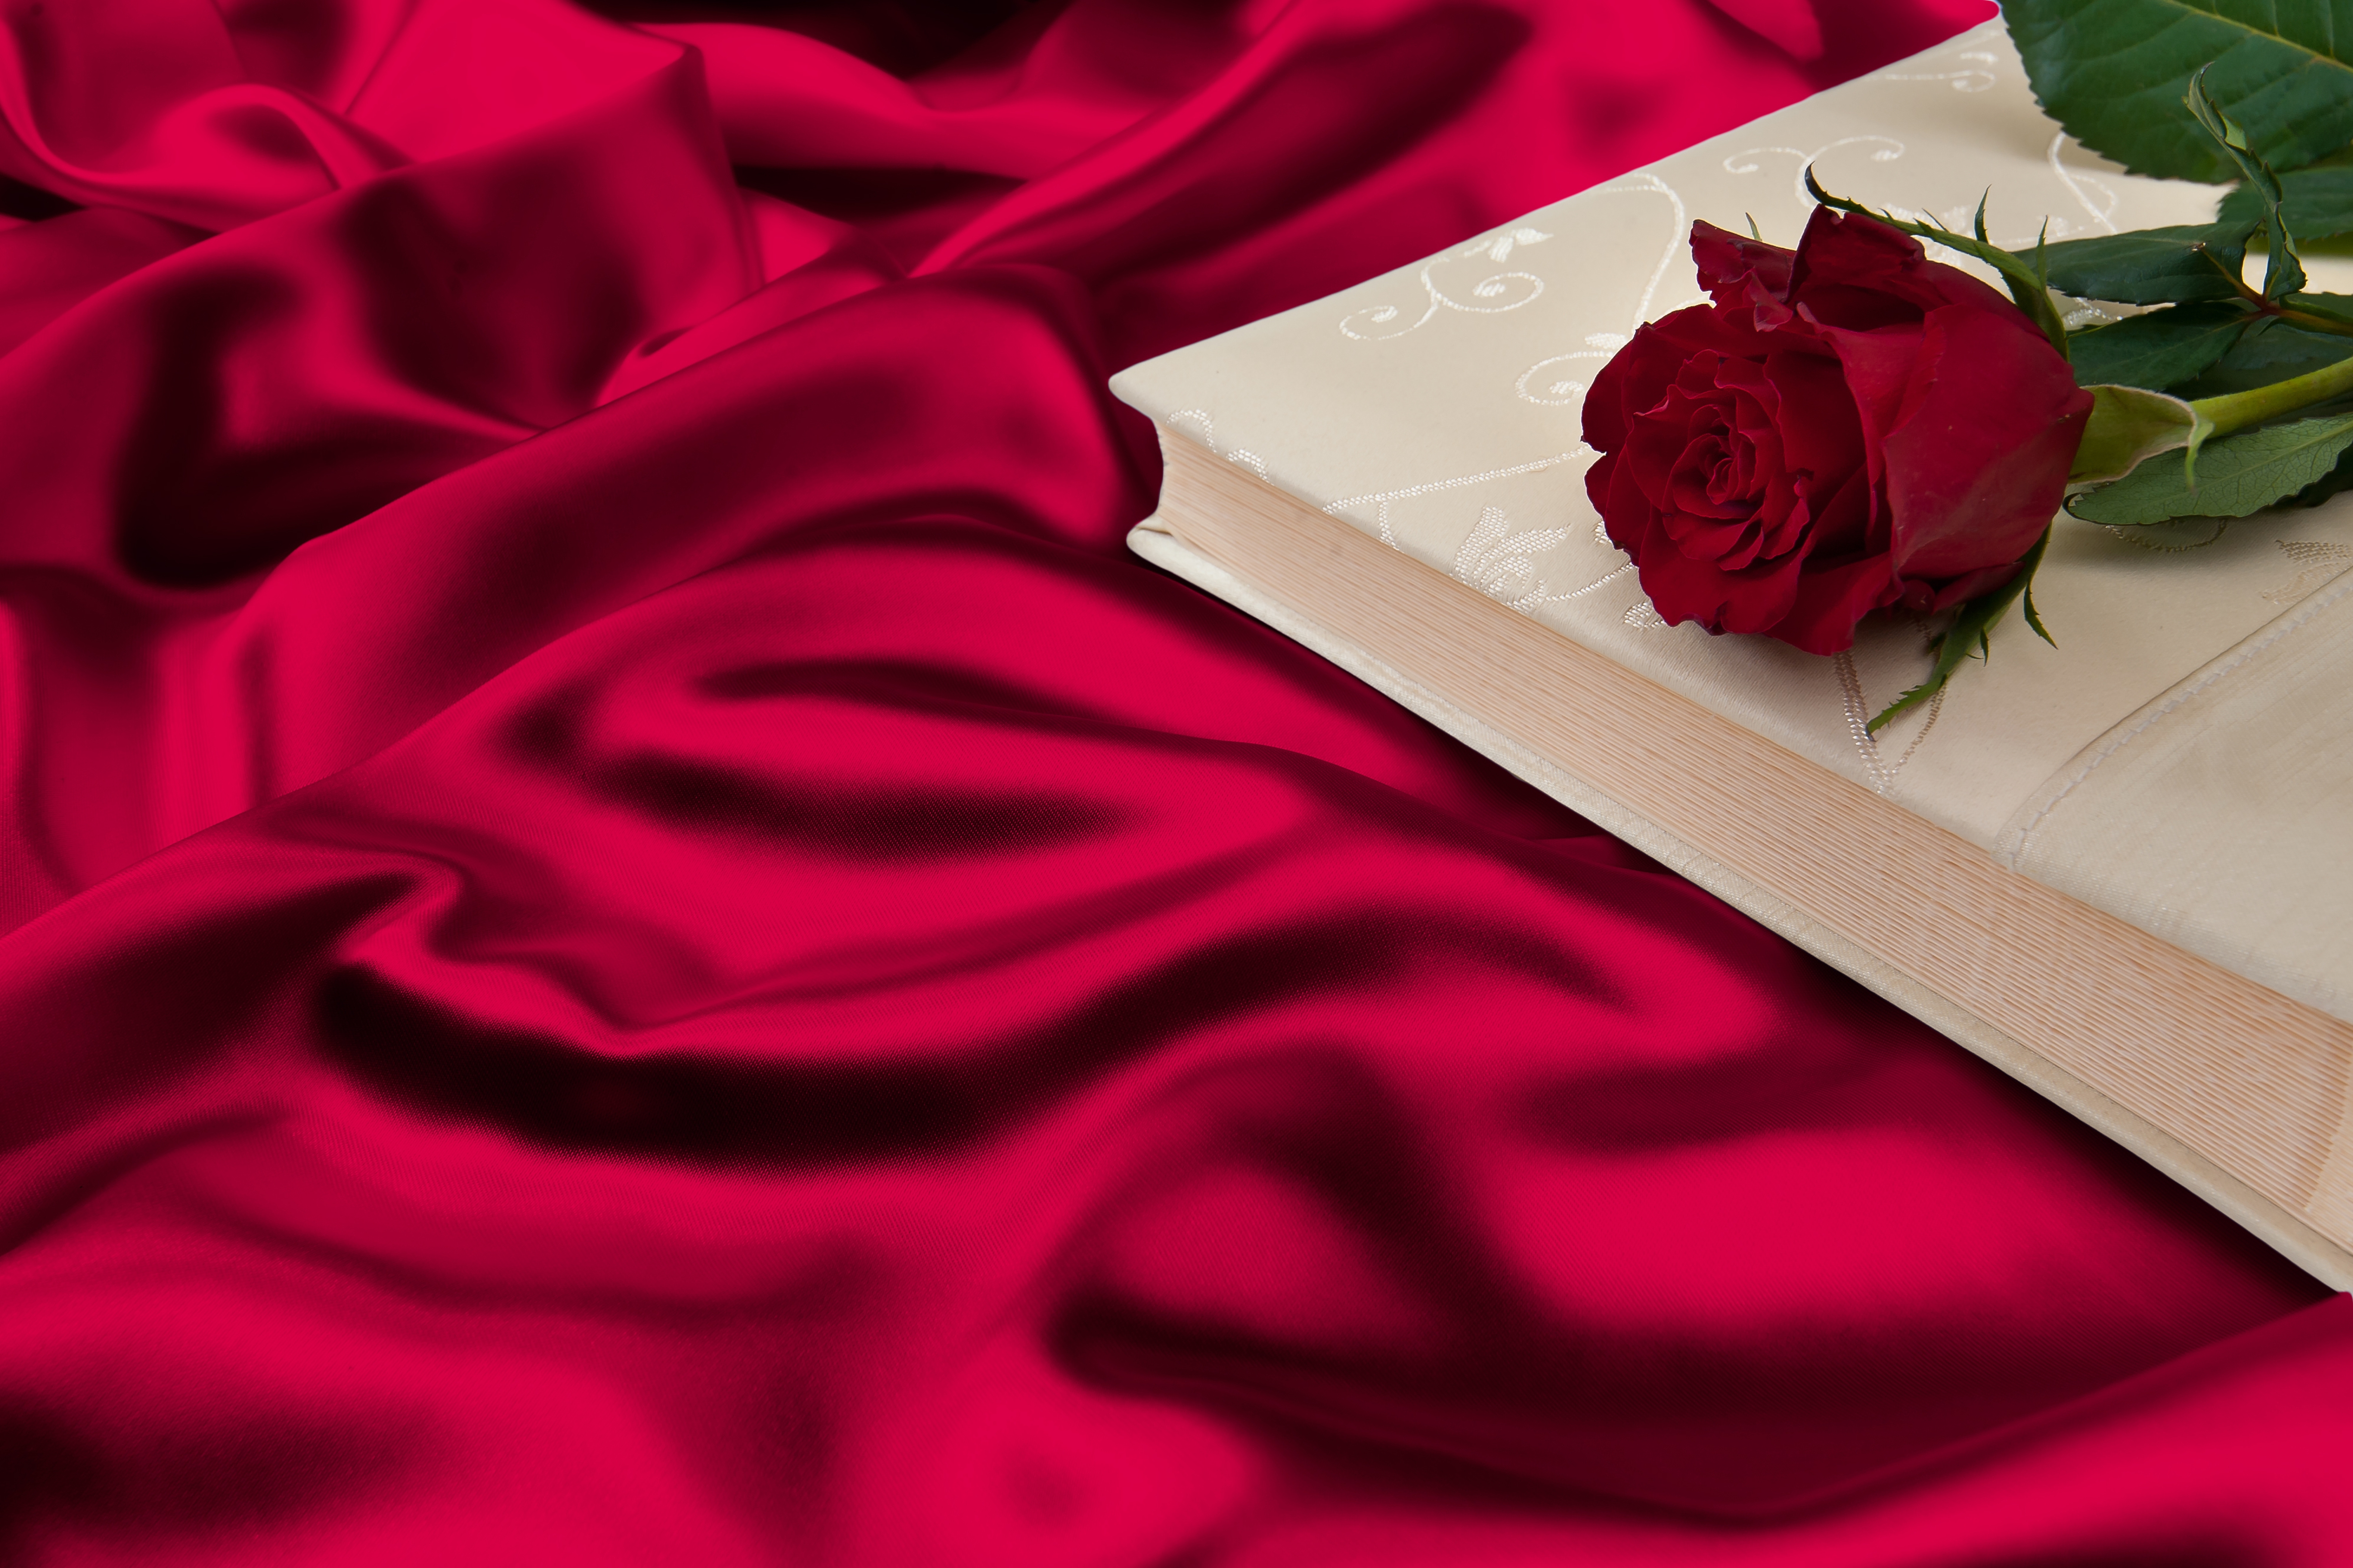 red flower, photography, still life, book, rose, silk